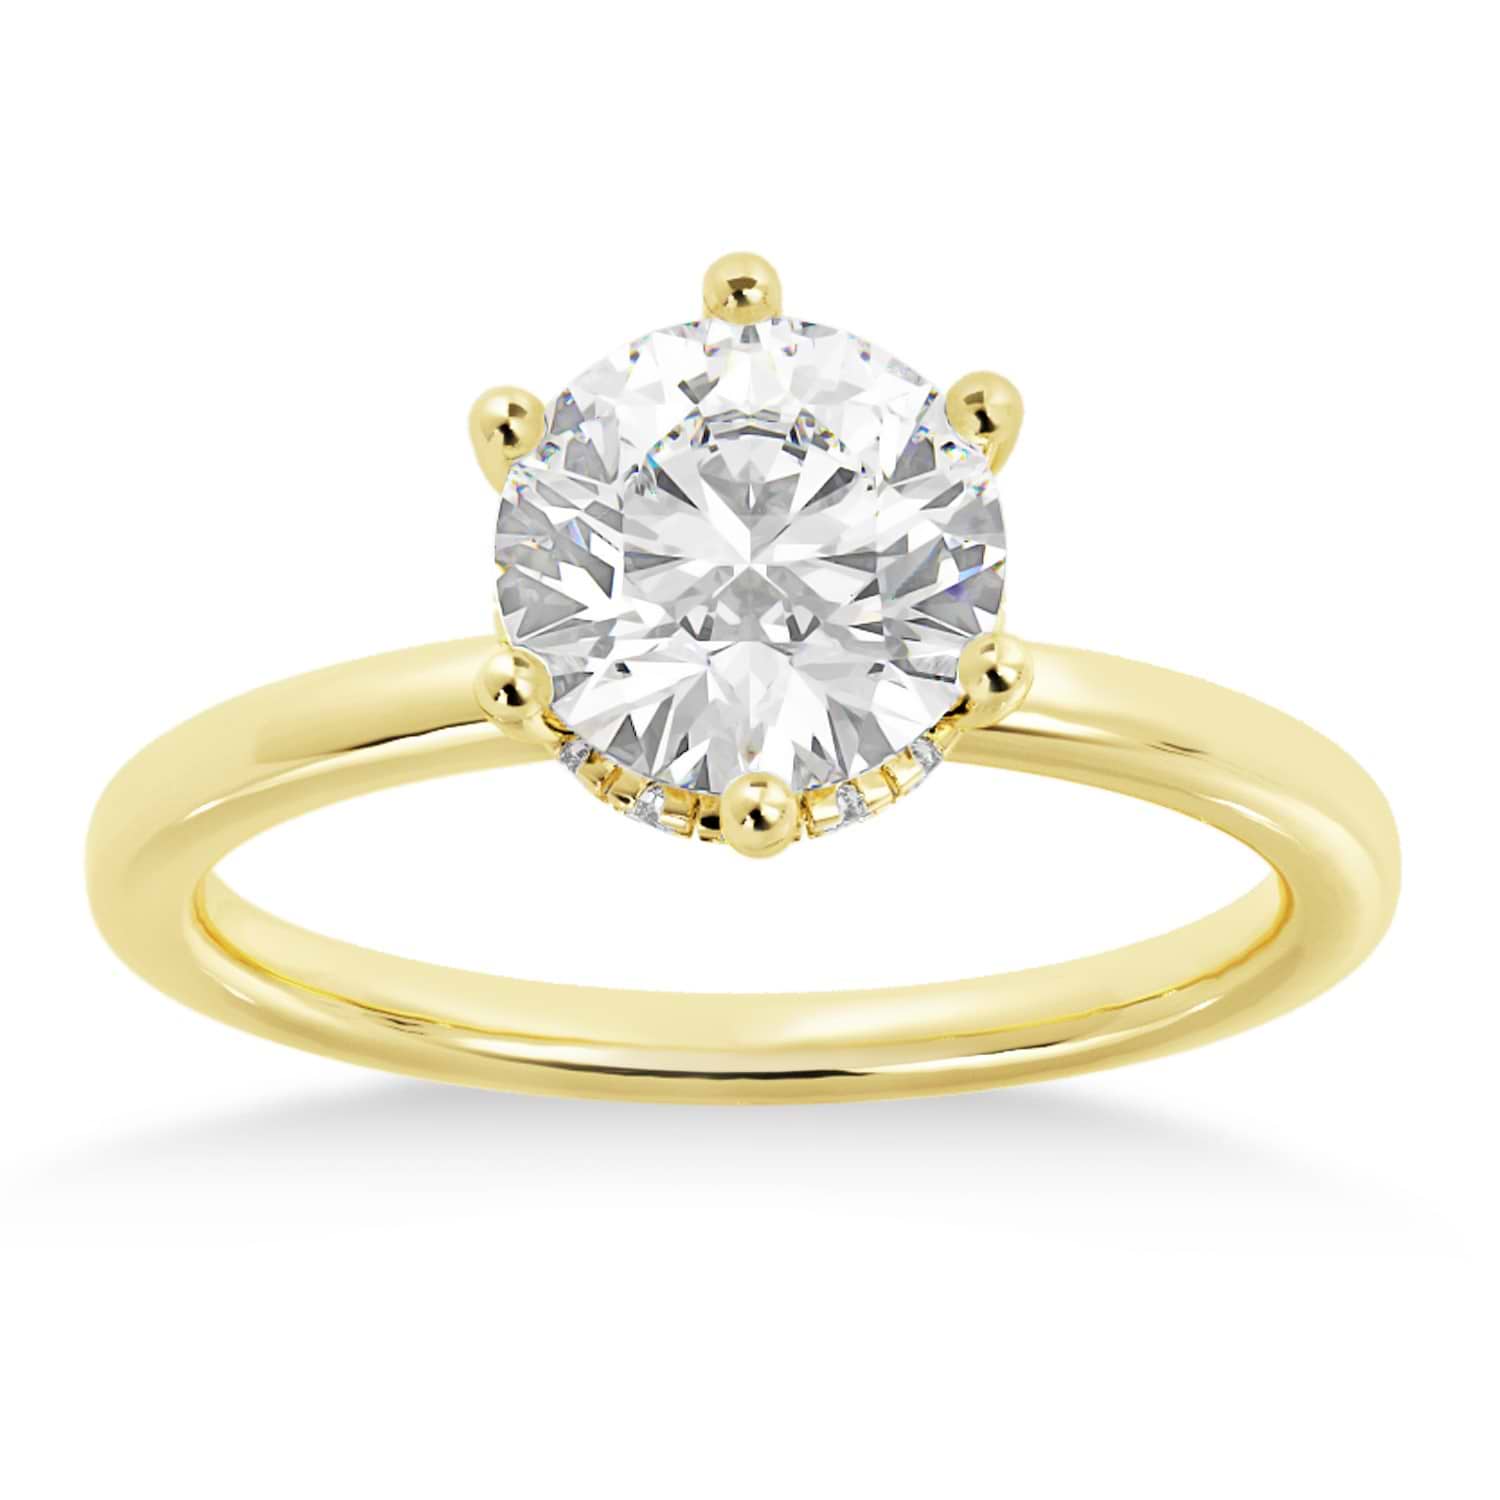 Lab Grown Diamond Hidden Halo 6 Prong Engagement Ring 18k Yellow Gold (0.08ct)